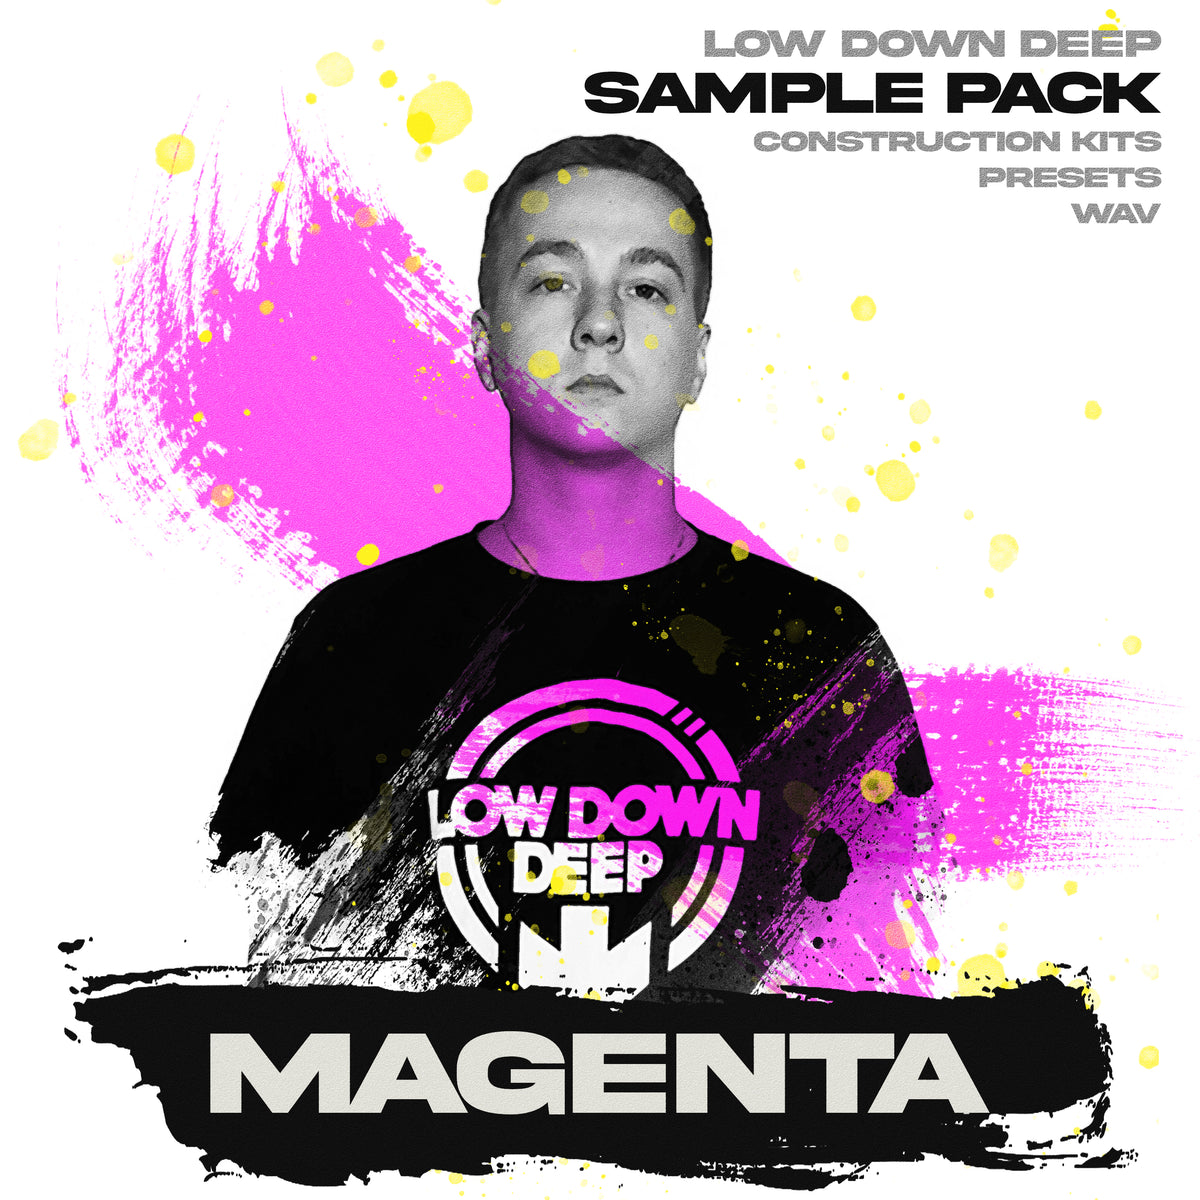 LDD Artist Series Sample Pack 003 - Magenta